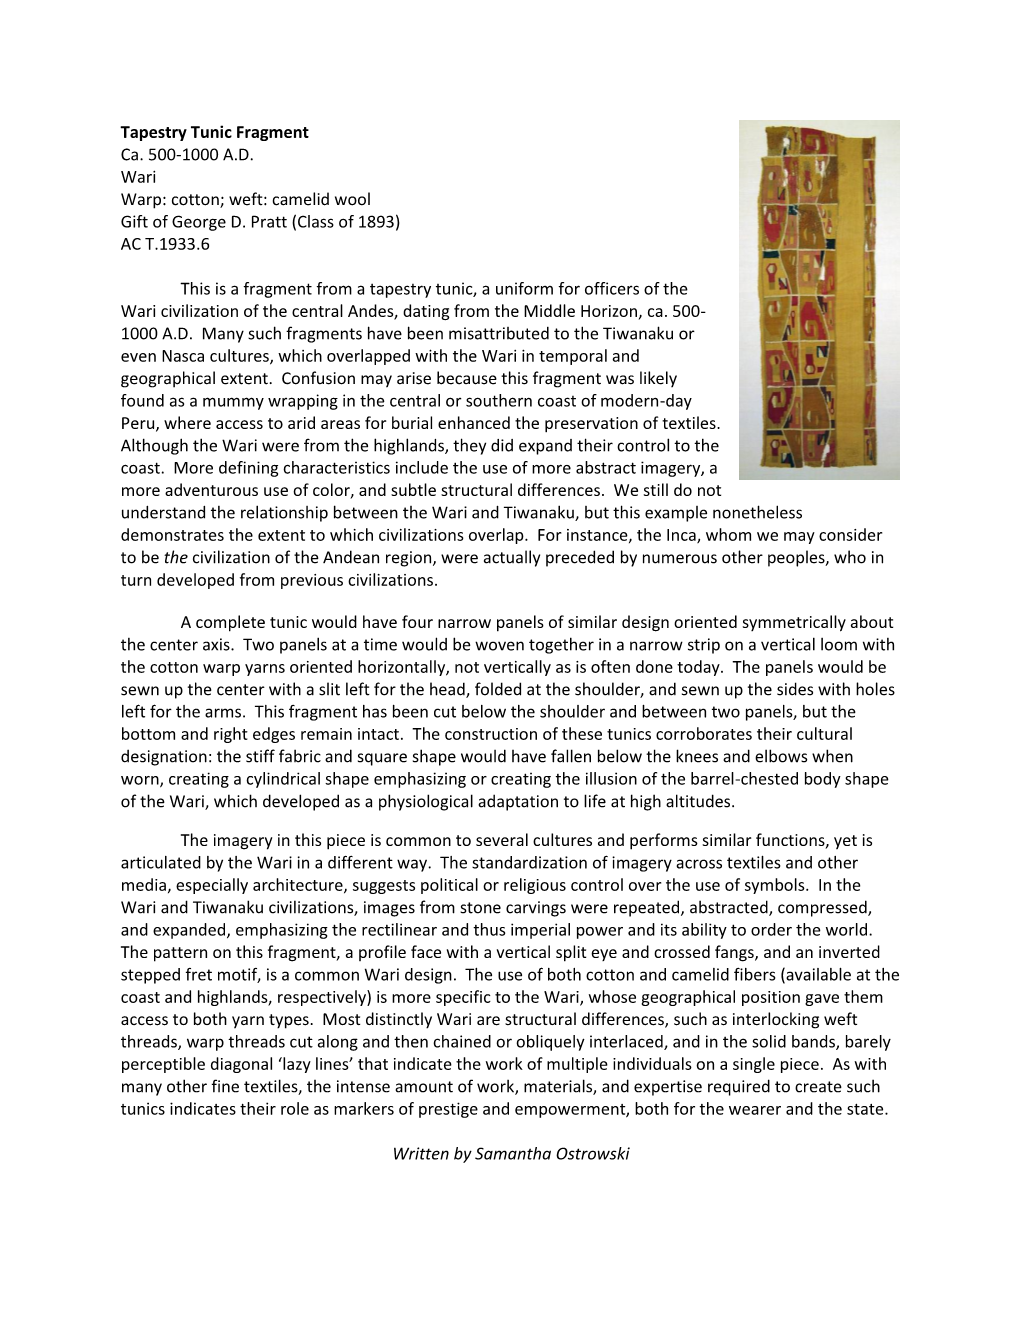 Tapestry Tunic Fragment Ca. 500-1000 AD Wari Warp: Cotton; Weft